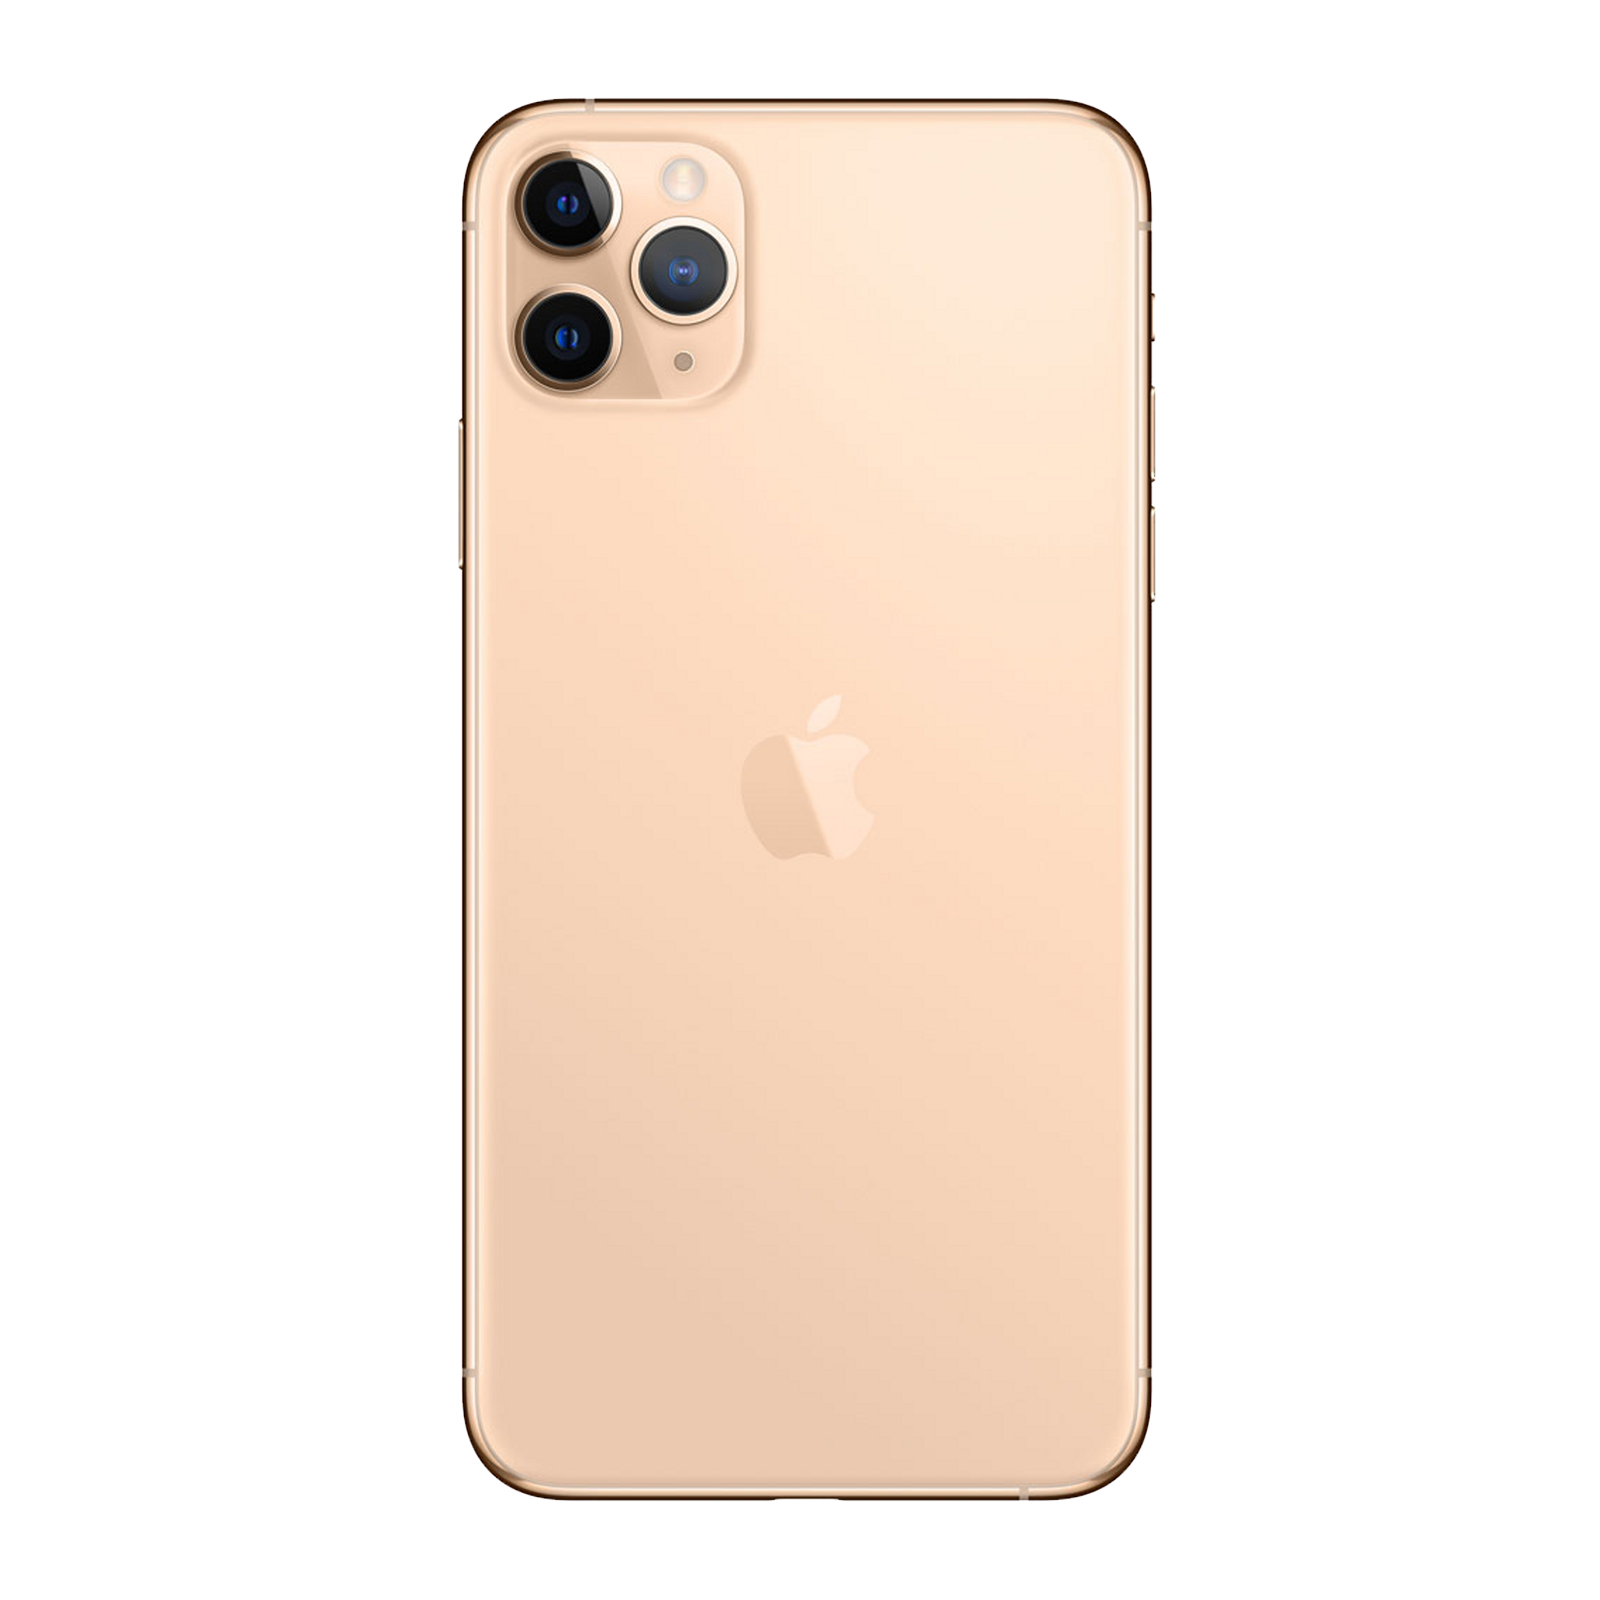 Apple iPhone 11 Pro Max 64GB Gold Very Good - Unlocked